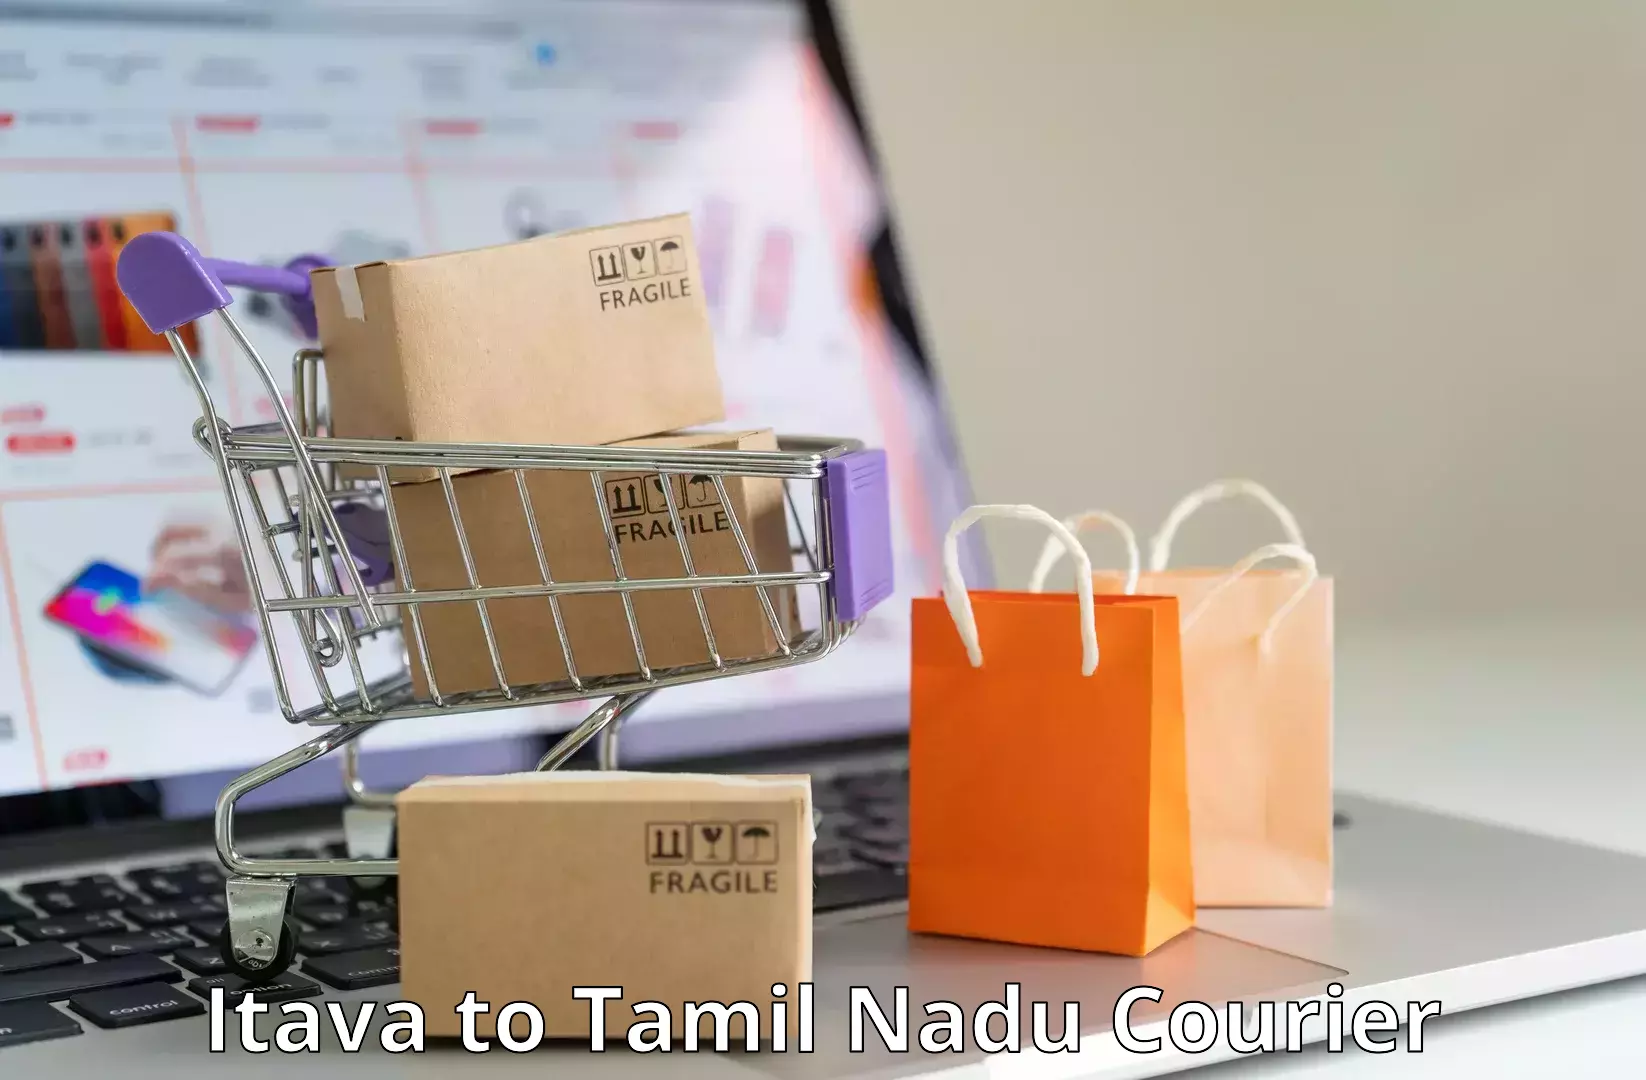 Efficient cargo handling Itava to Tamil Nadu